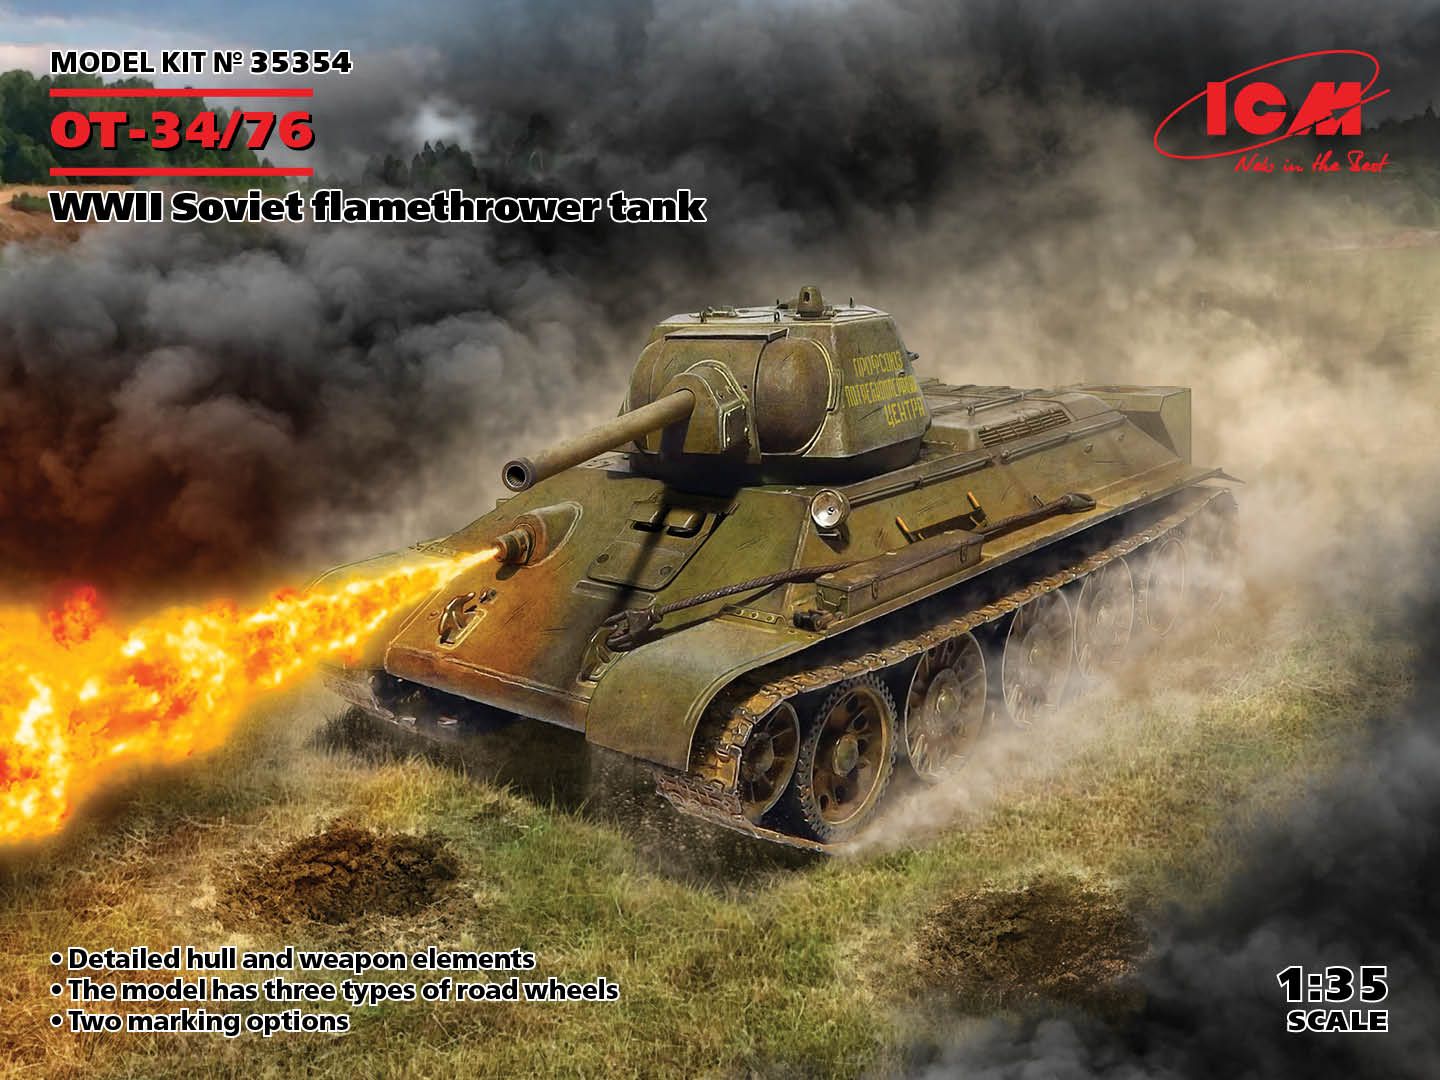 ICM 1/35th scale IT-34/76 WWII Soviet Flamethrower Tank